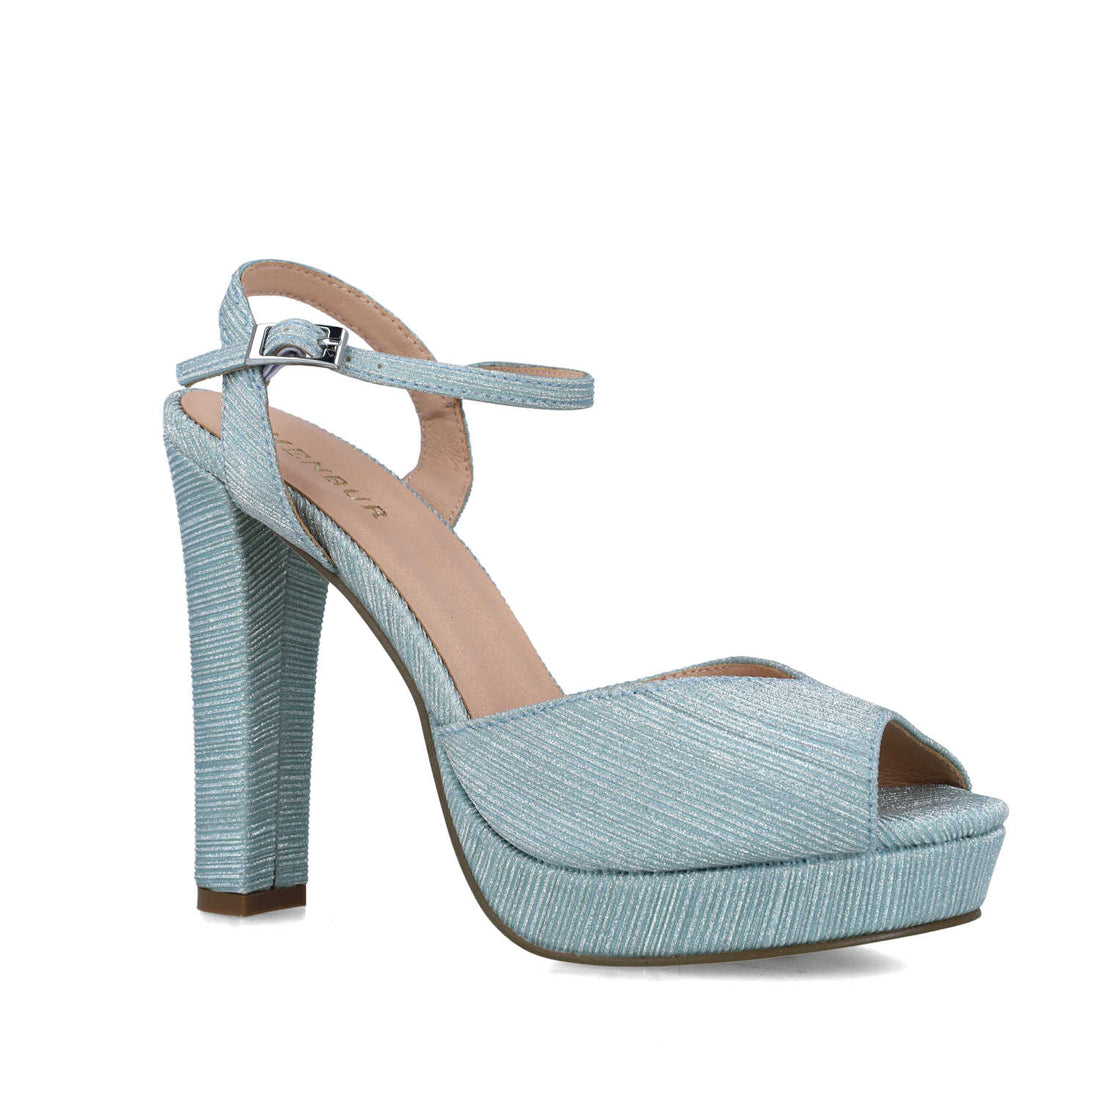 Blue Peep Toe Ankle-Strap Heels